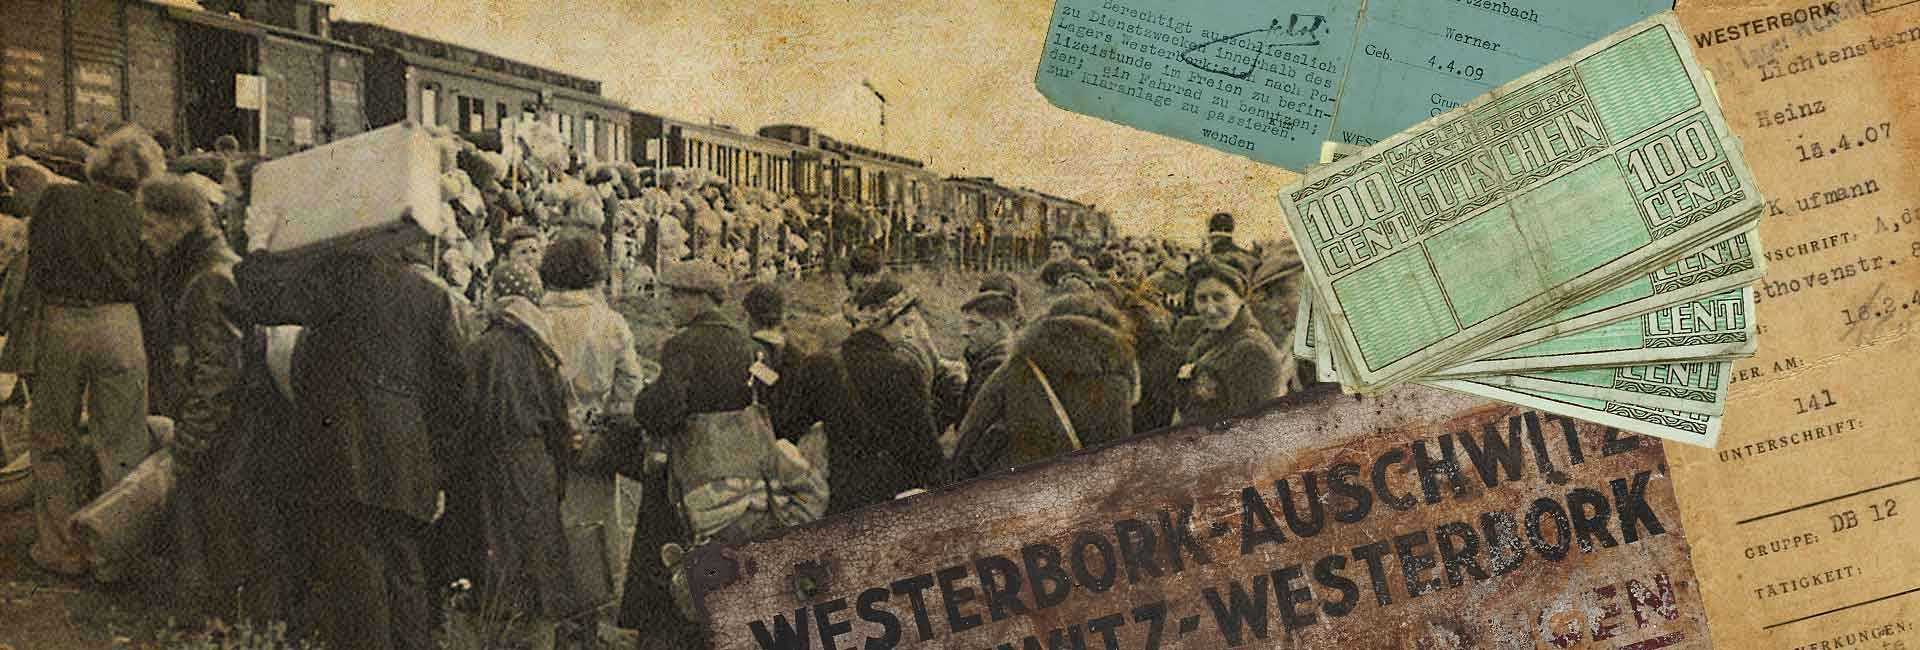 Camp Westerbork transit camp history